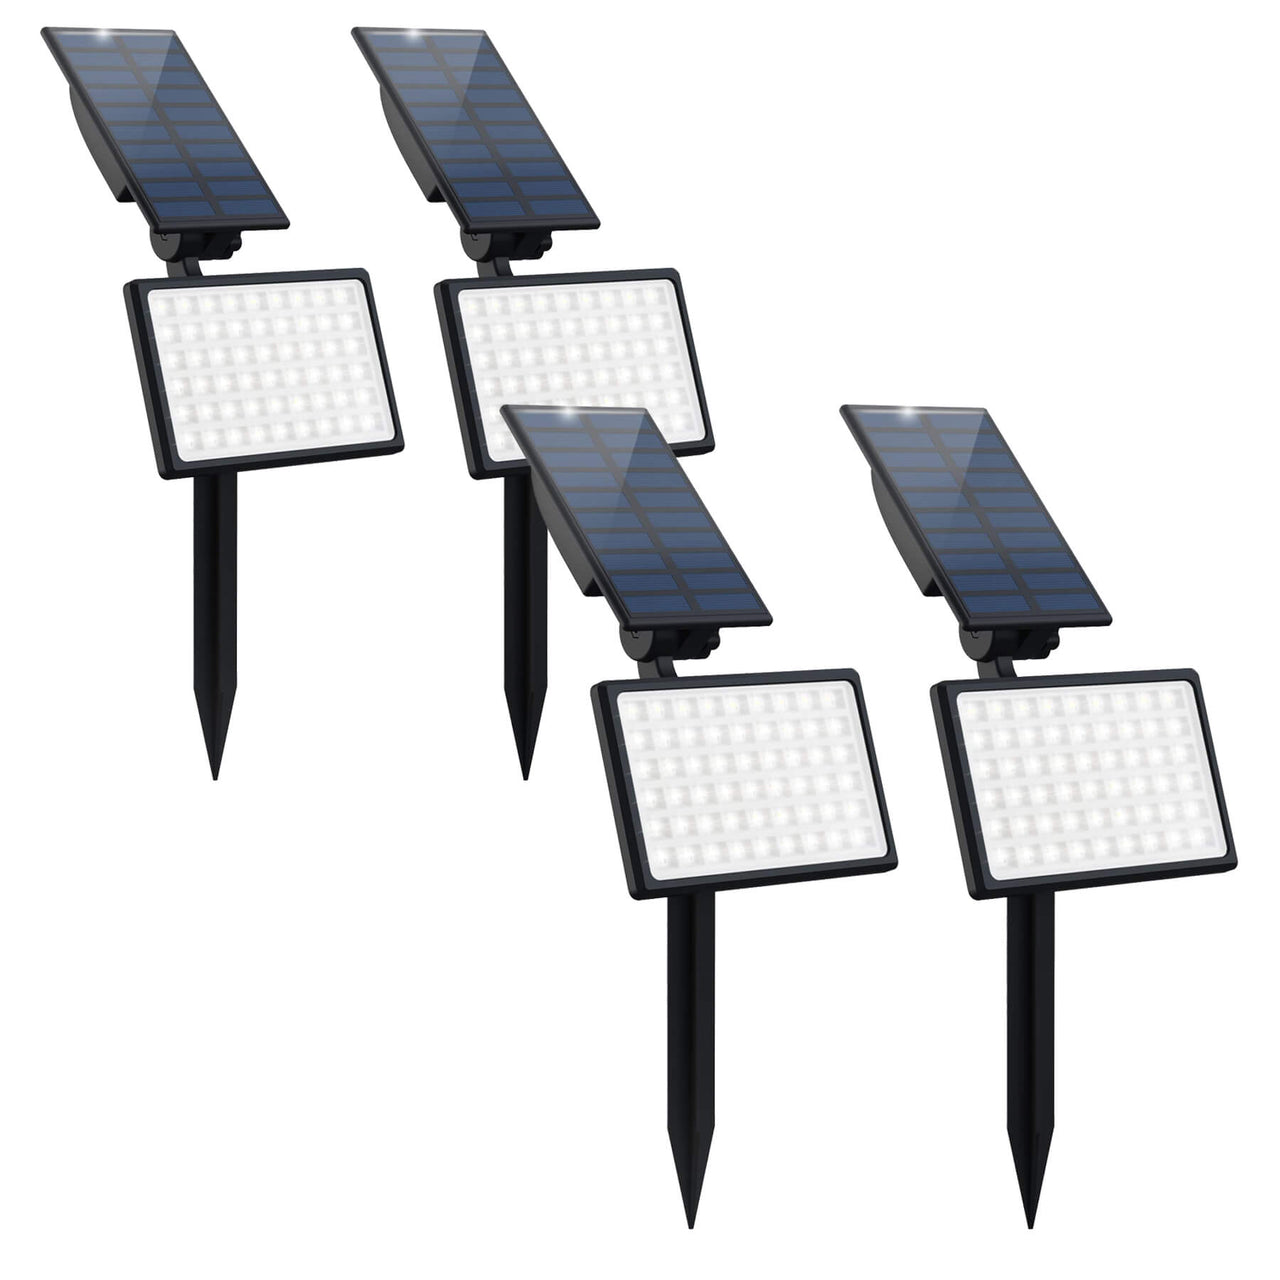 TSUN 54 LEDs Solar Flood Lights